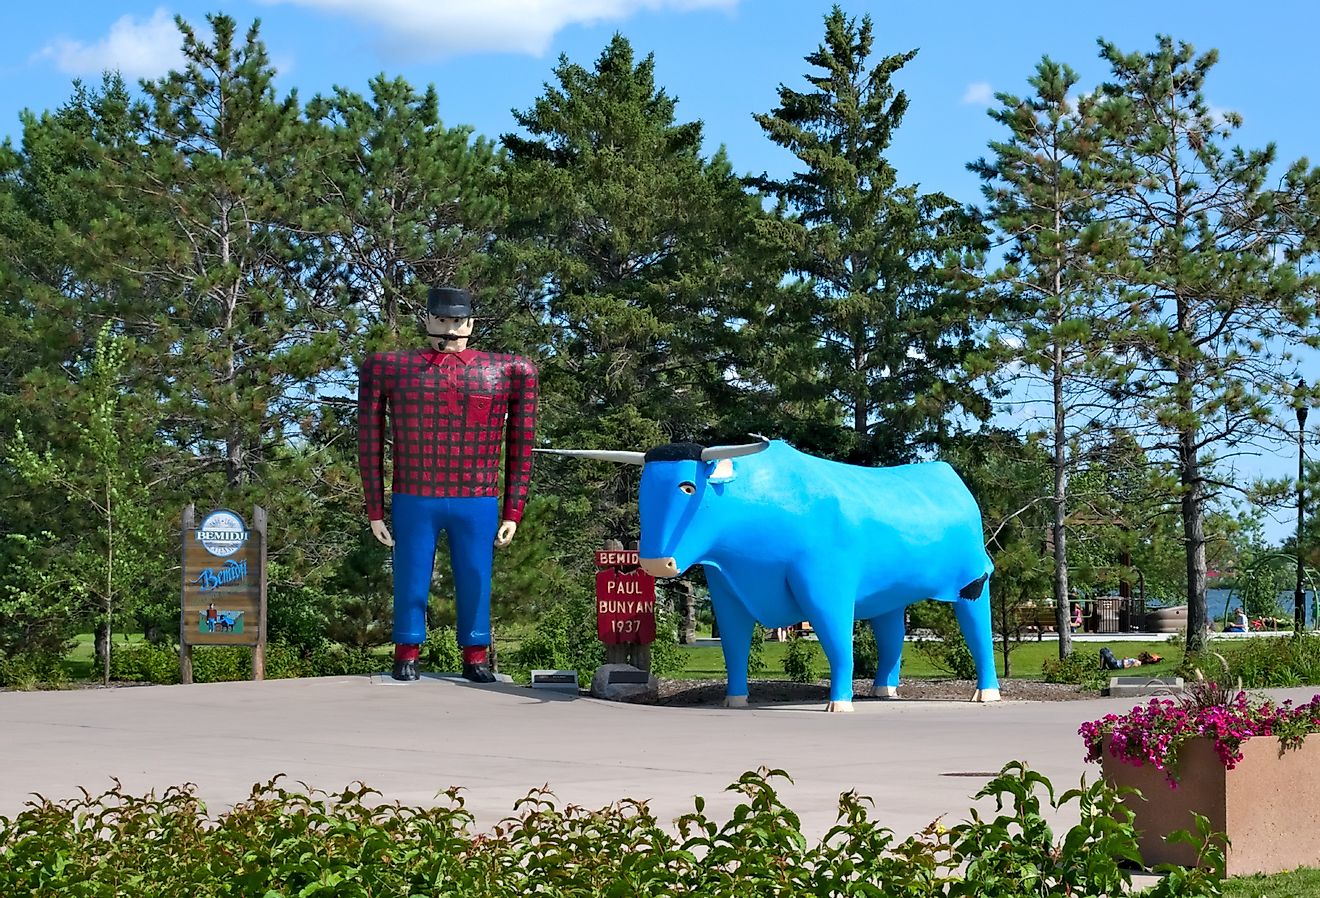 Paul Bunyan and Babe the Blue Ox, are popular roadside attraction statues of the legendary lumberjack and his sidekick in Bemidji, Minnesota. Image credit Edgar Lee Espe via Shutterstock